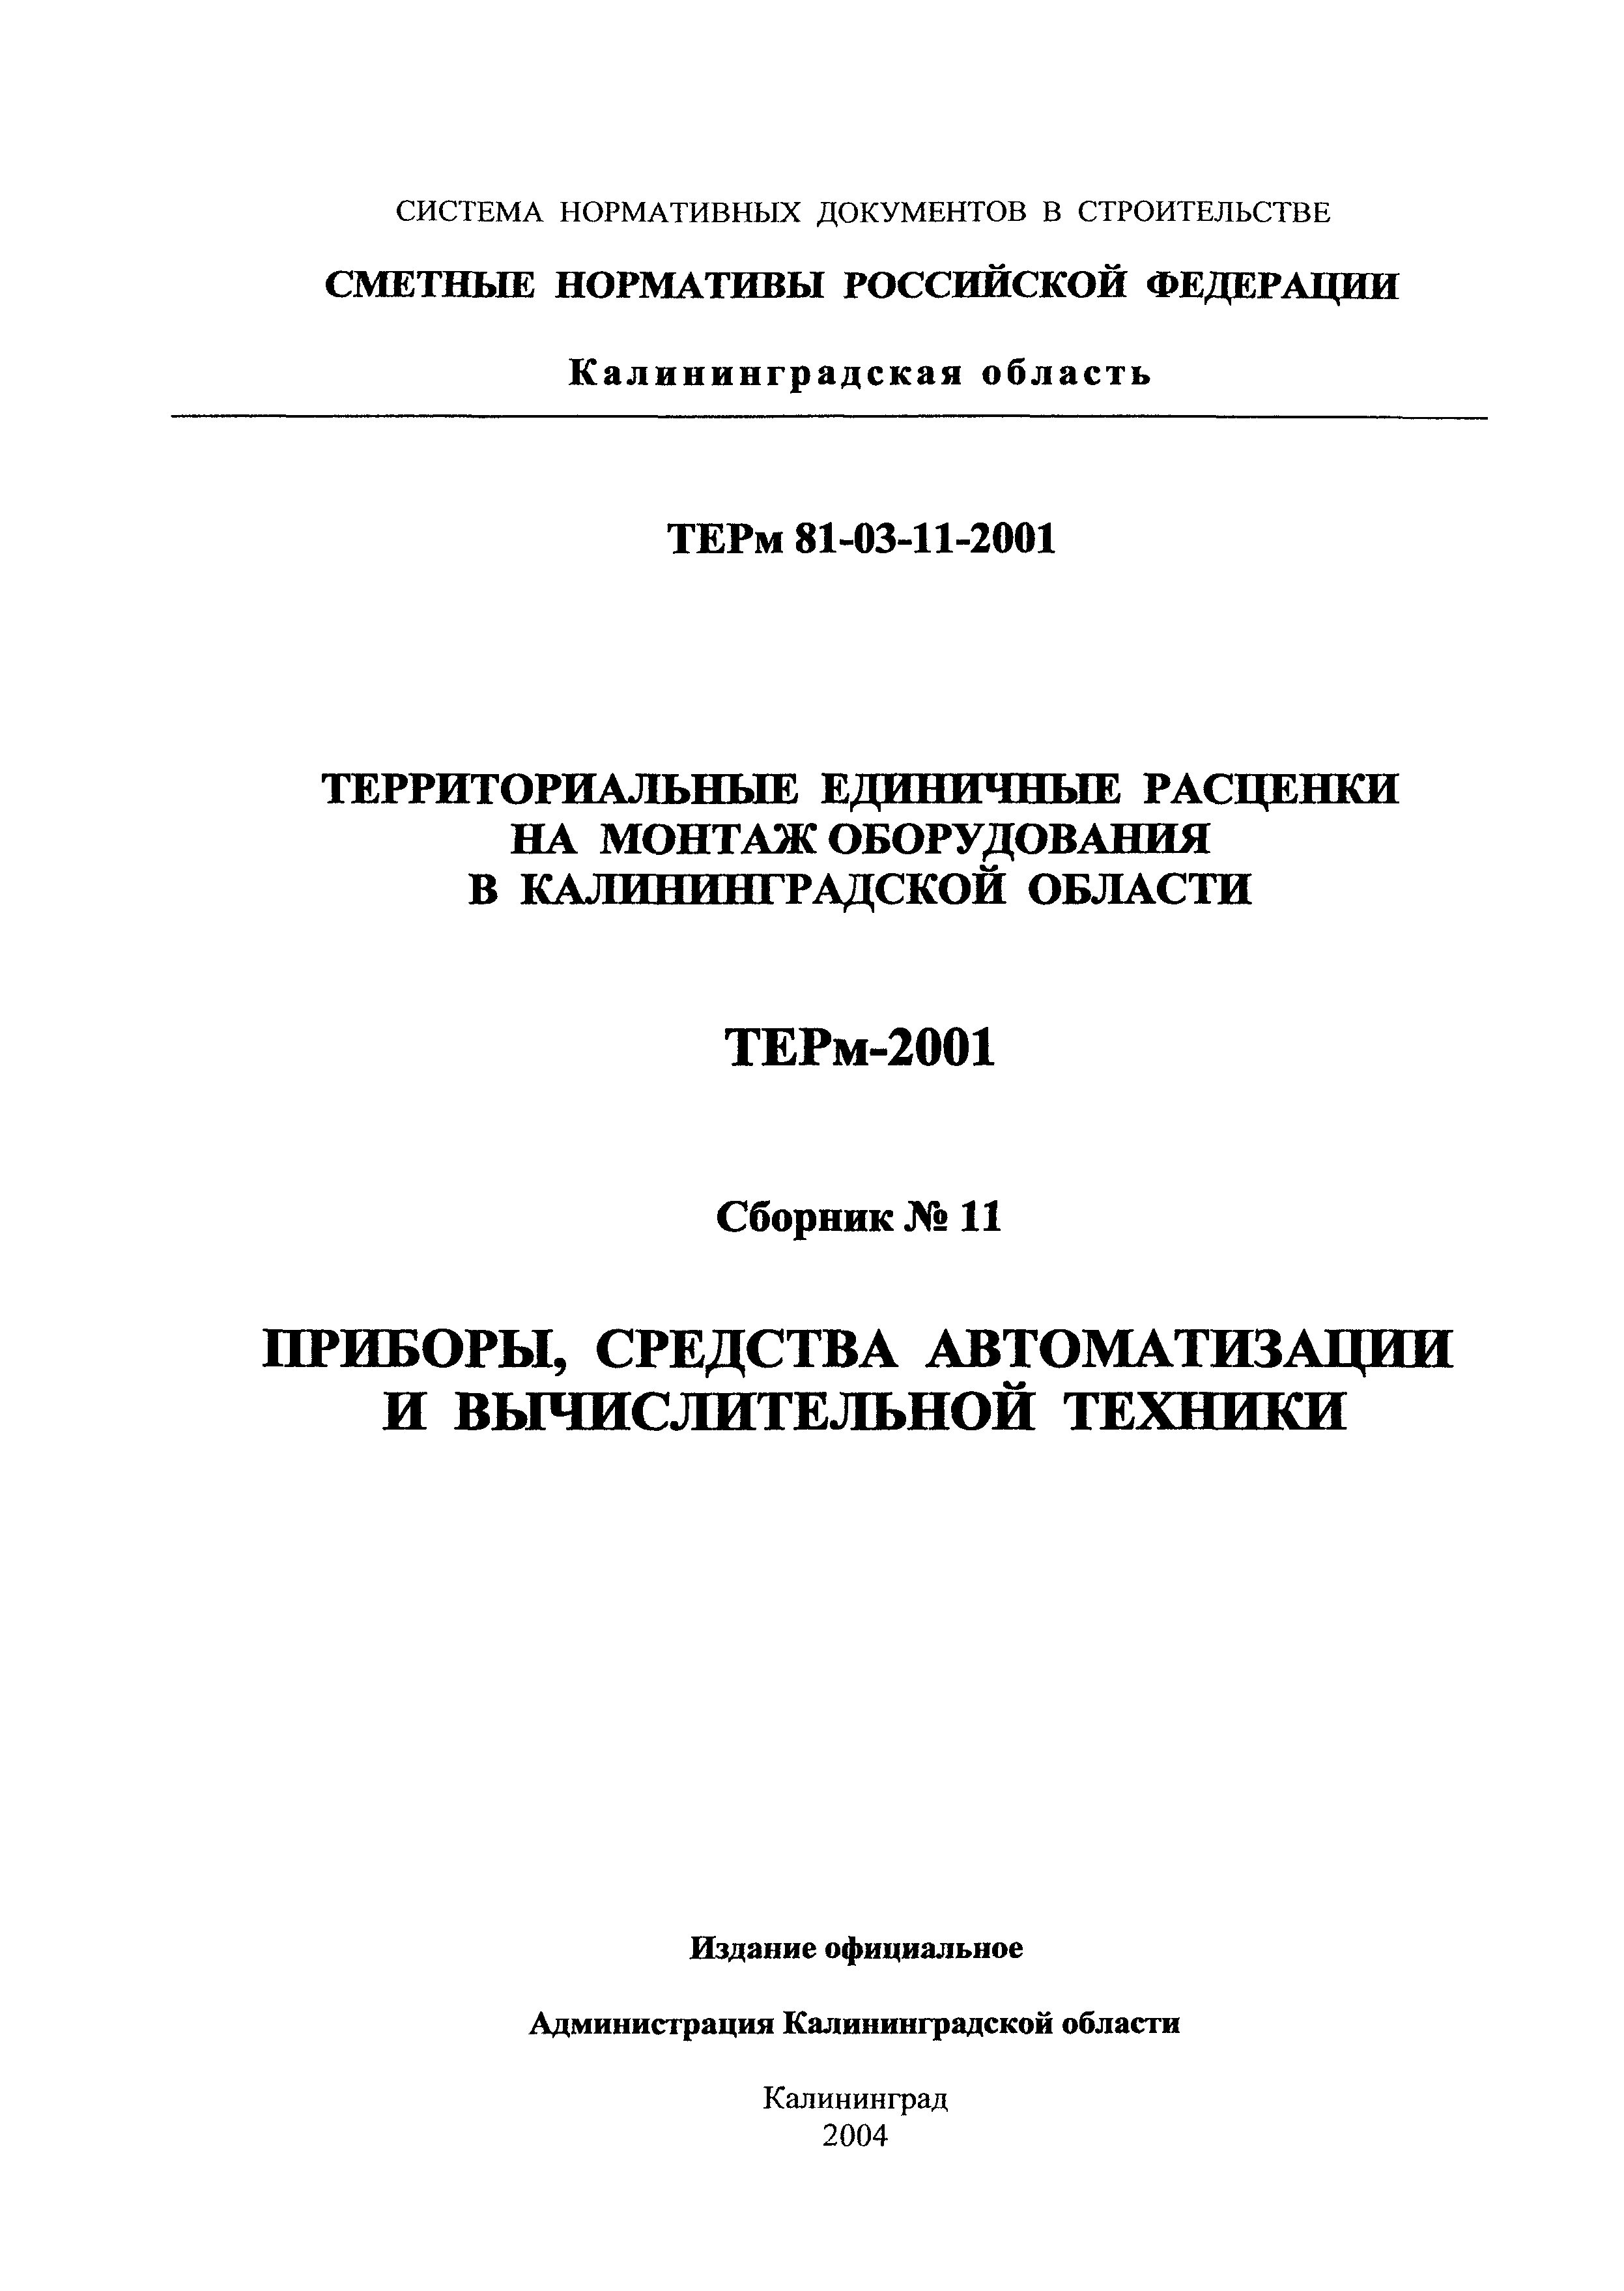 ТЕРм Калининградской области 2001-11